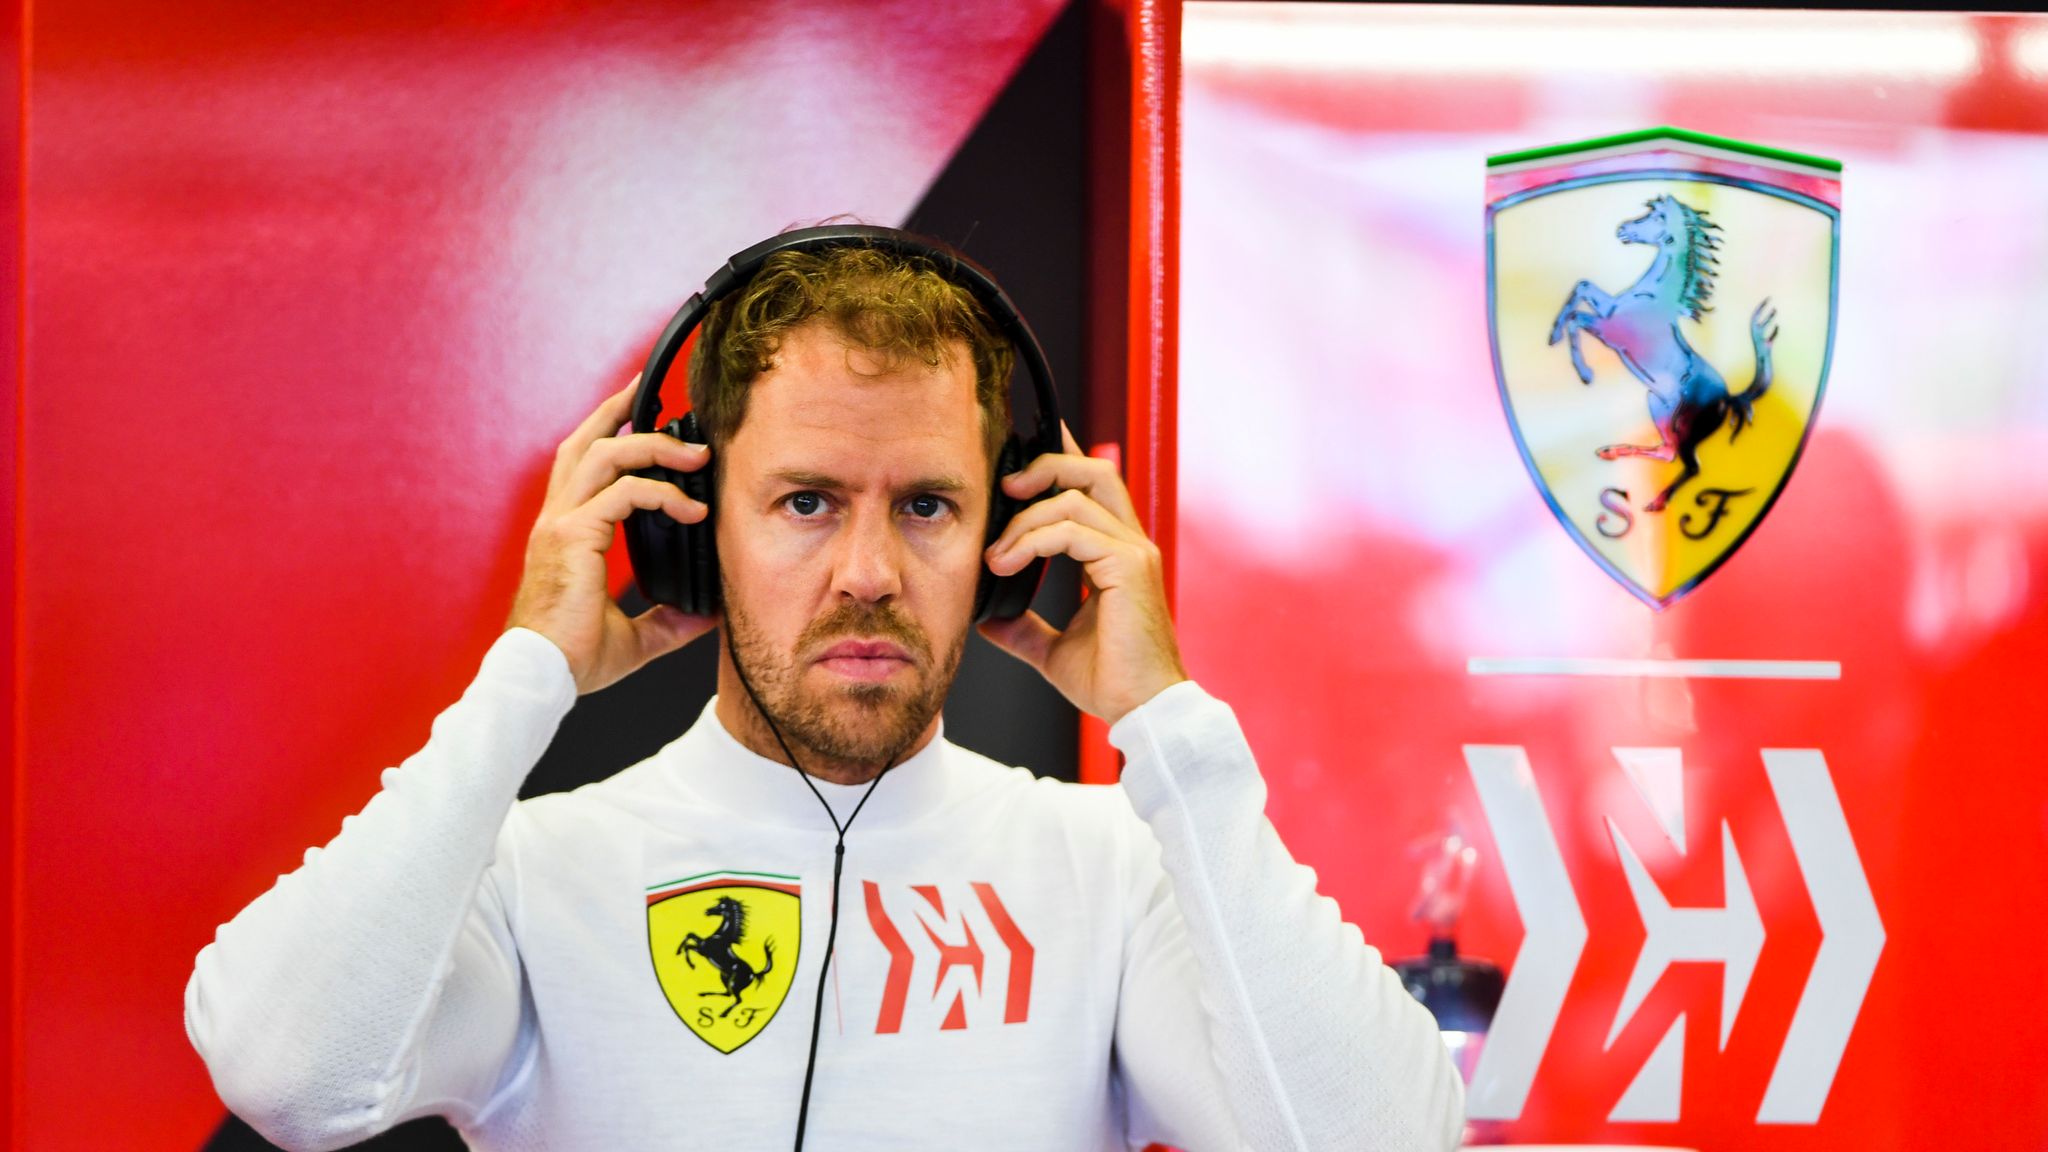 F1 Mexico Grand Prix 2018: Sebastian Vettel reveals what he said